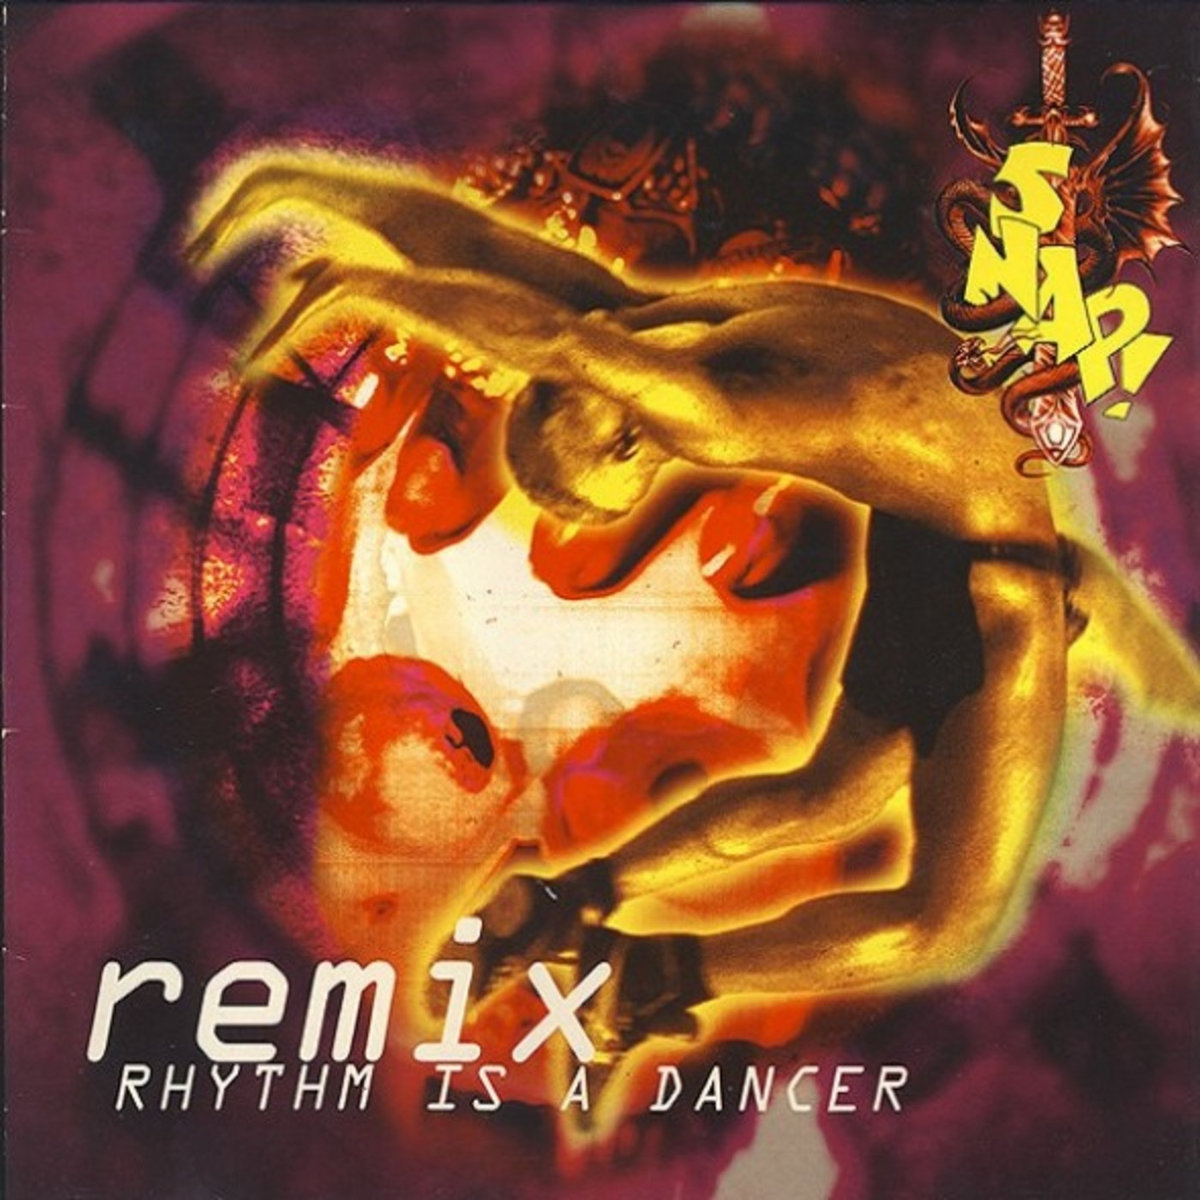 Rhythm is a dancer mp3. Snap группа Rhythm. Snap Rhythm is a Dancer обложка. Альбом Rhythm is a Dancer. Rhythm is a Dancer Snap ремикс.